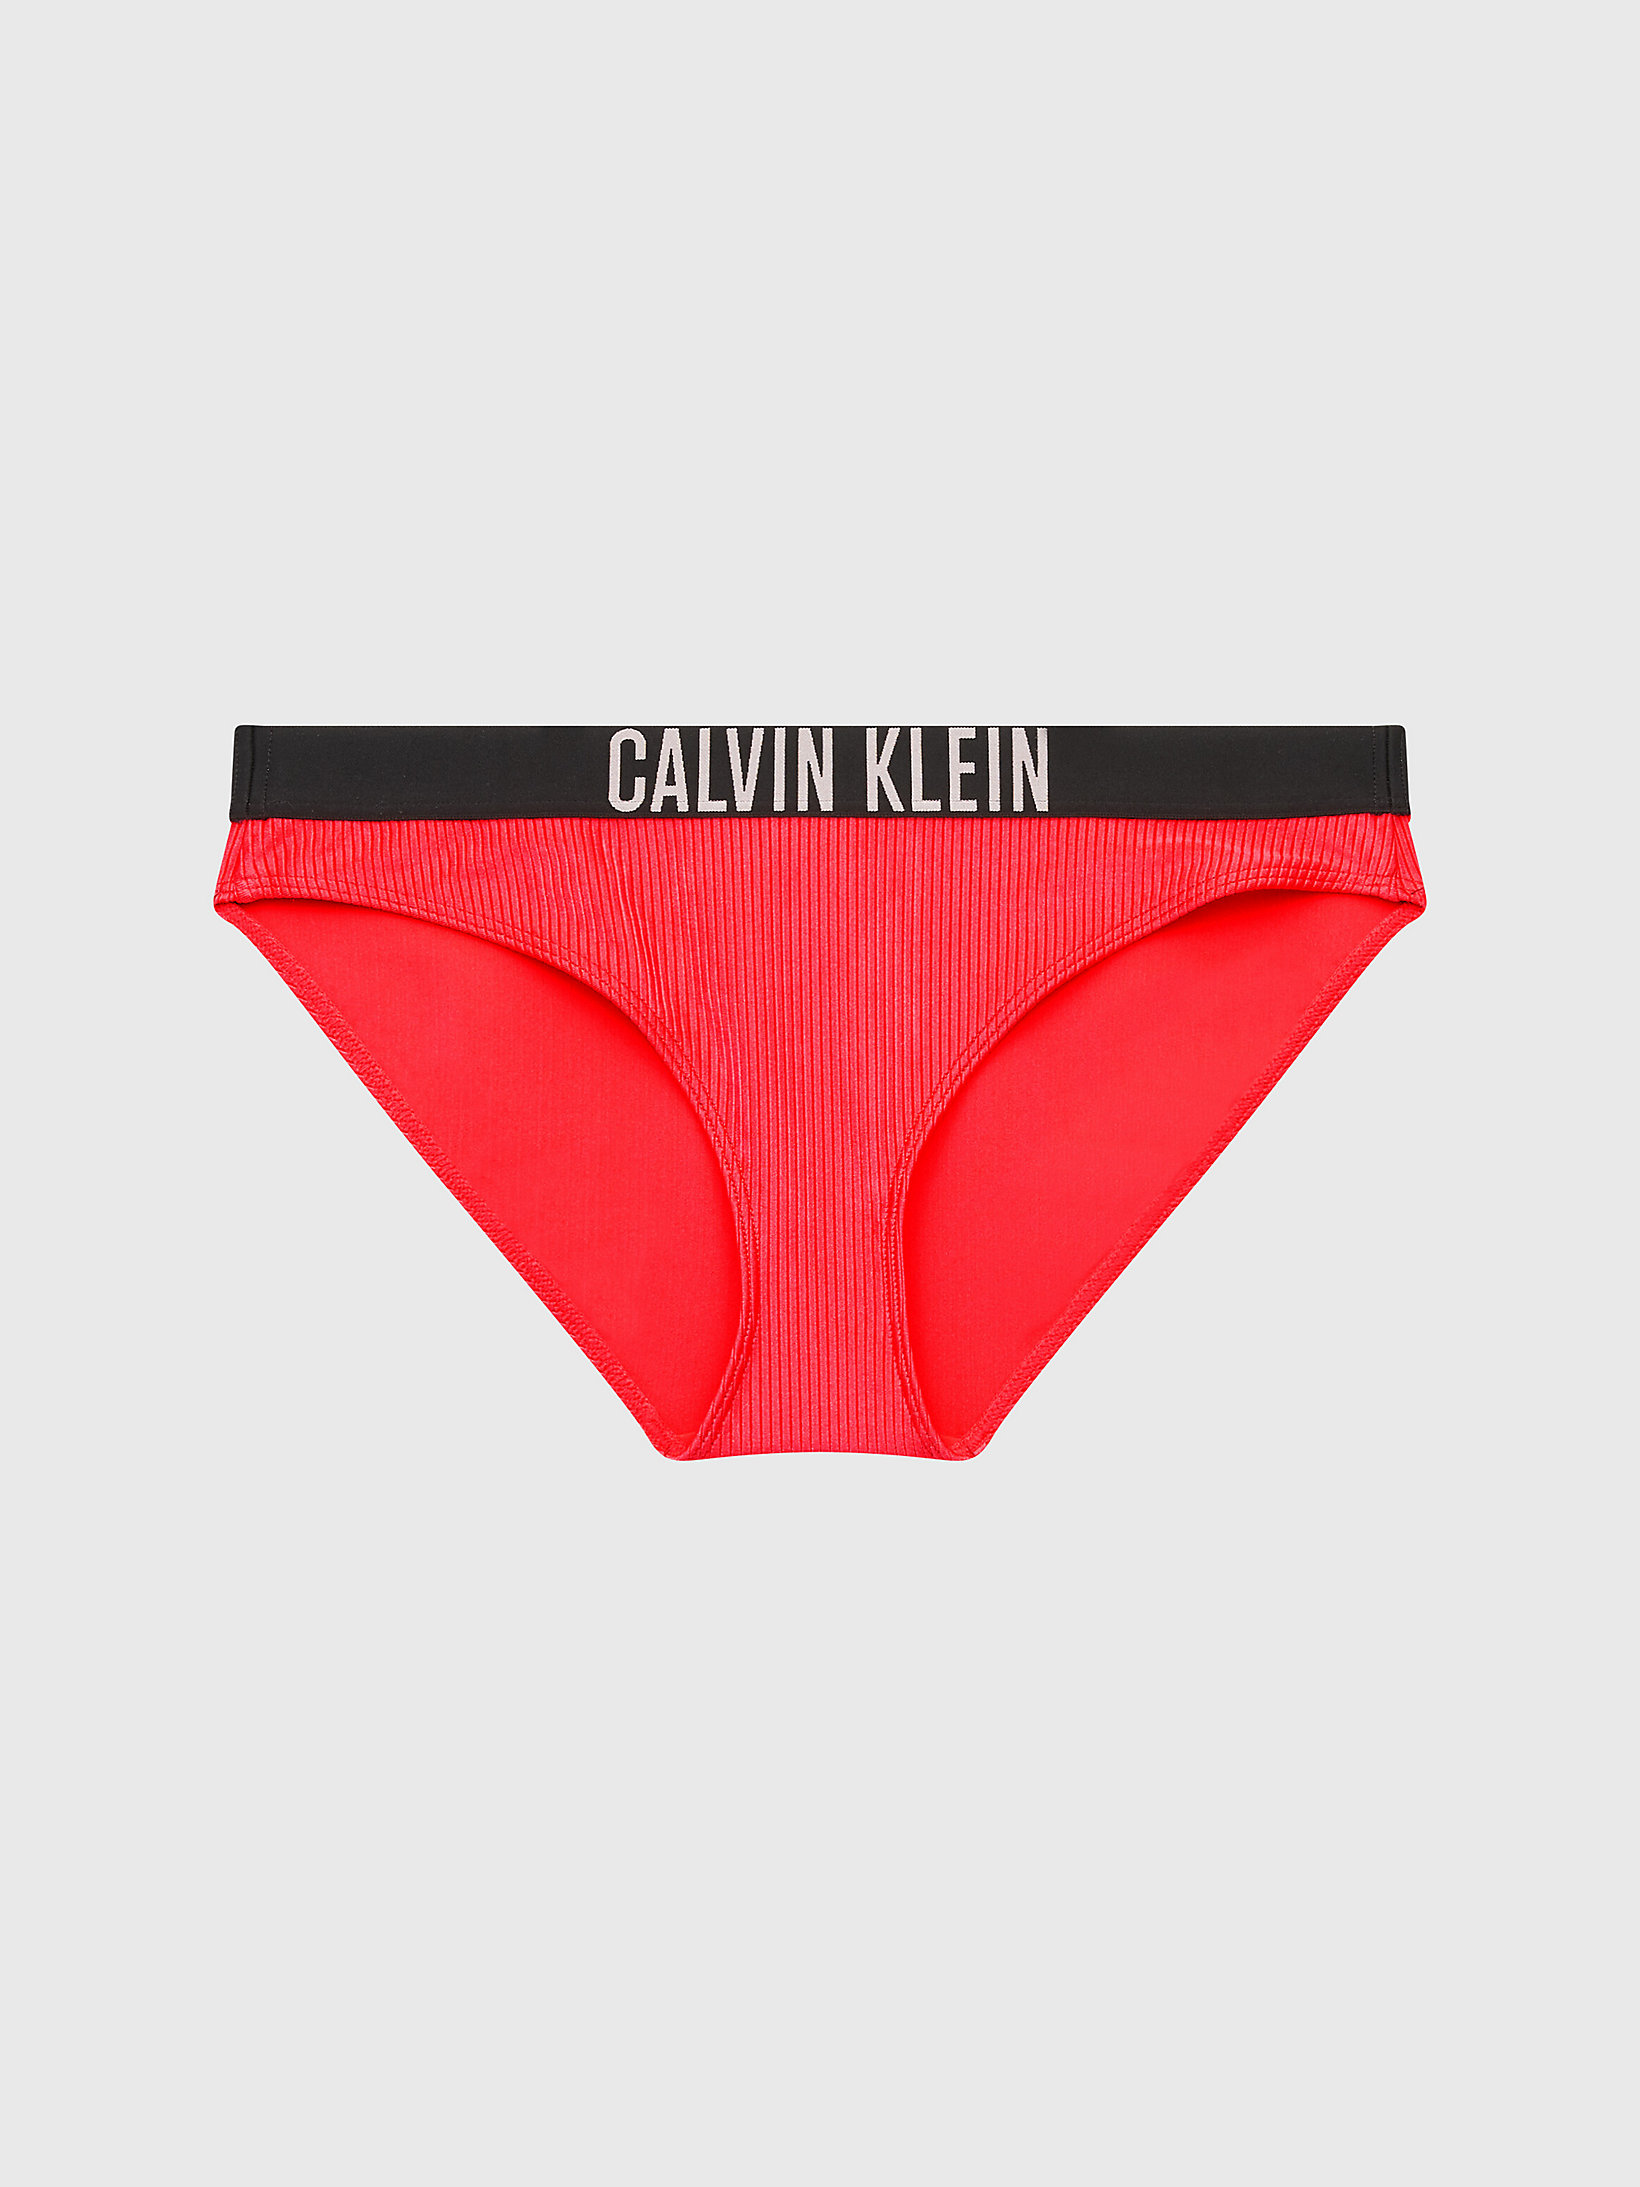 Coral Crush Bikini Bottom - Intense Power undefined women Calvin Klein